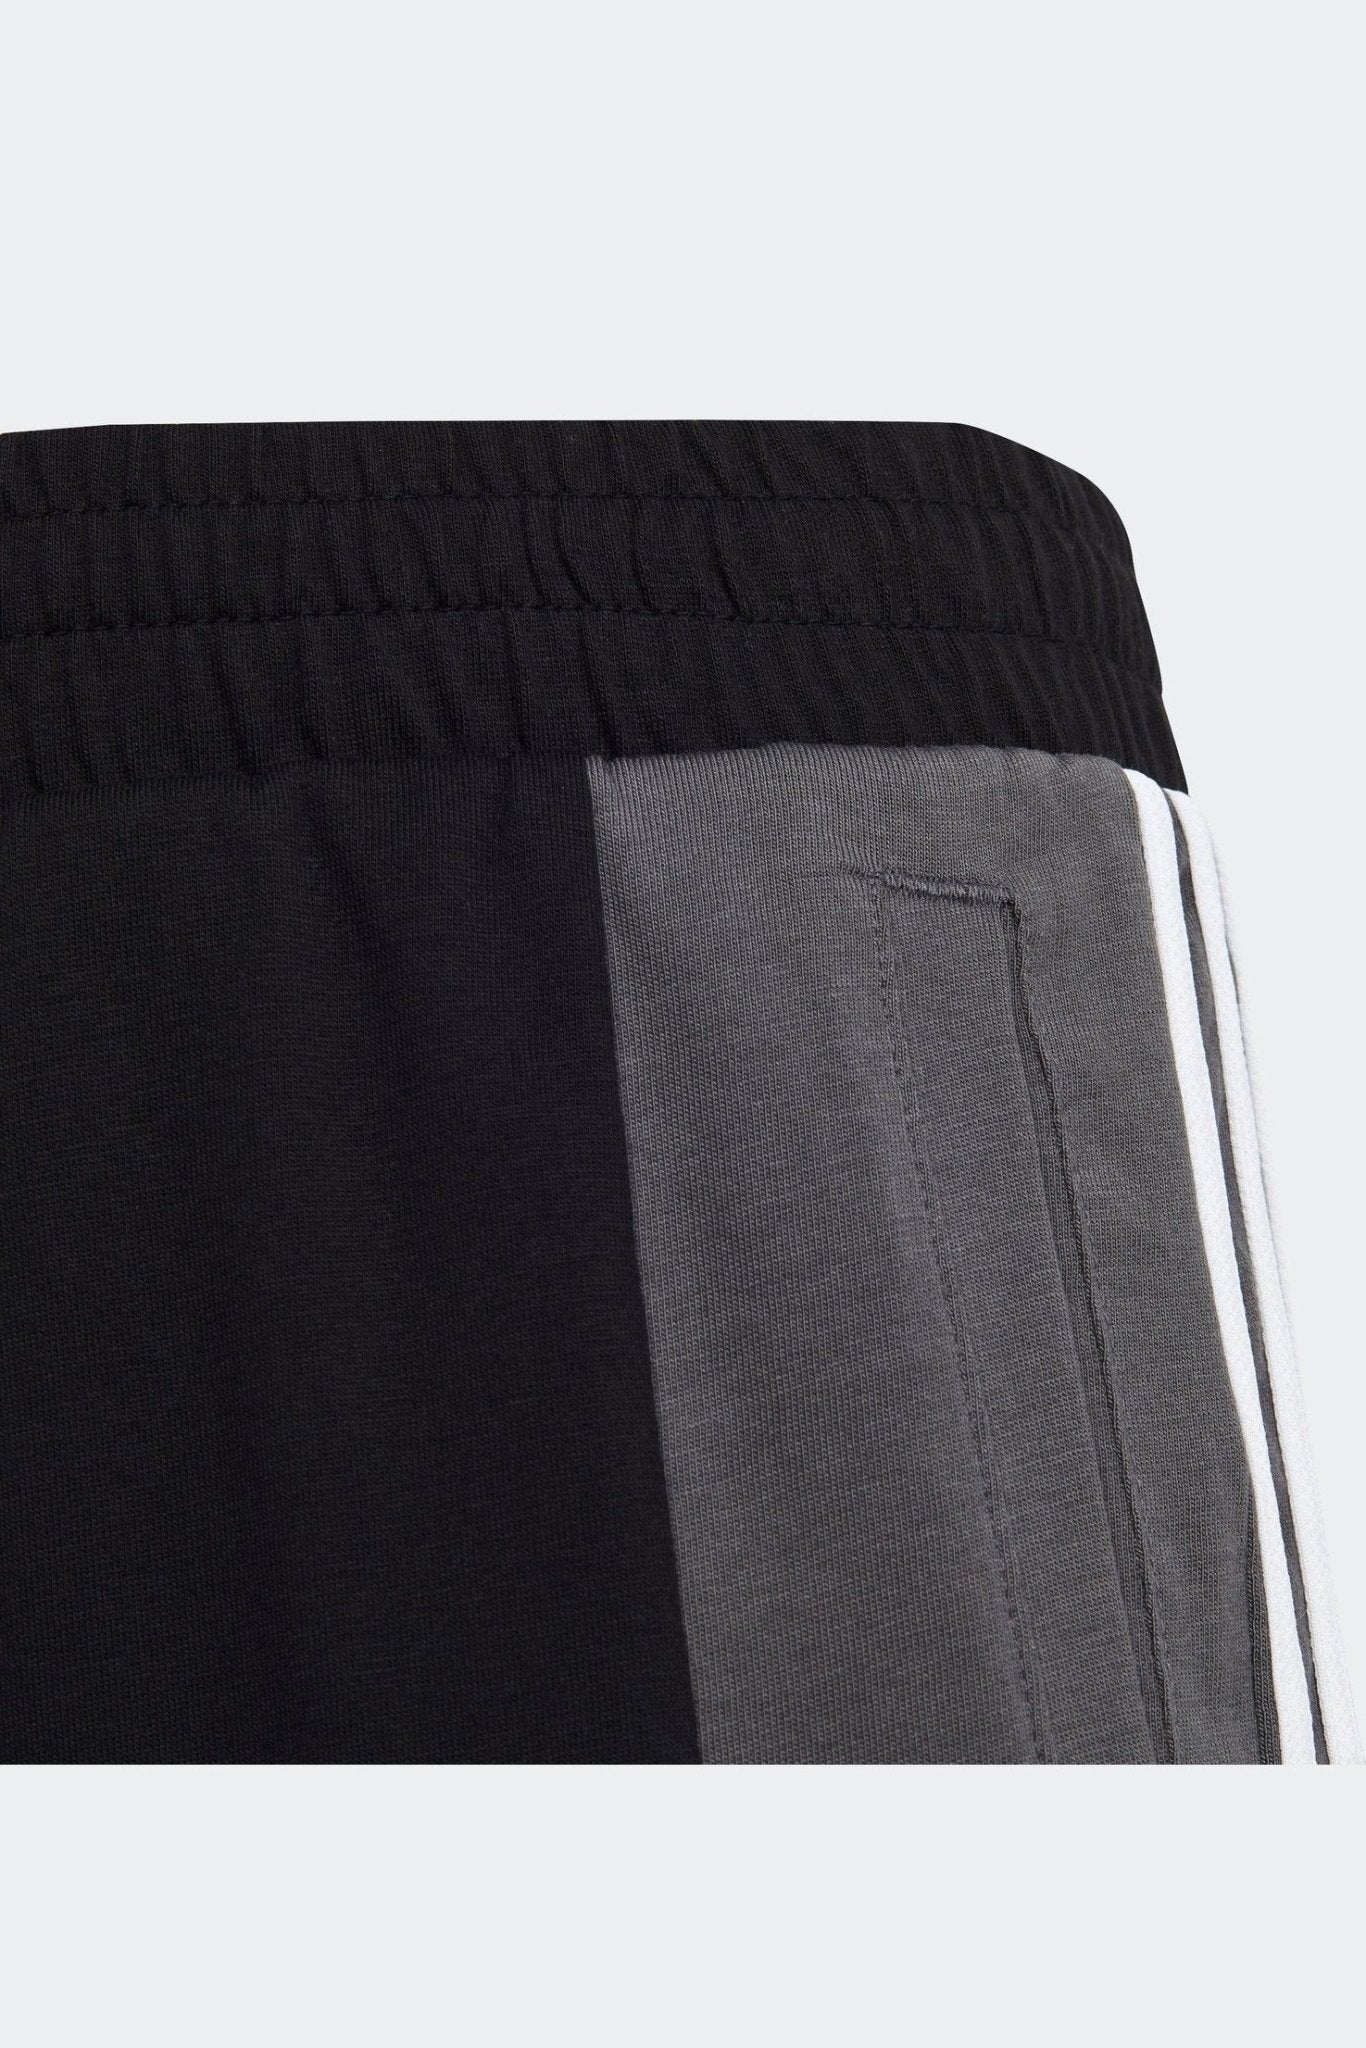 ADIDAS - מכנסיים קצרים לנוער בצבע שחור אפור - MASHBIR//365